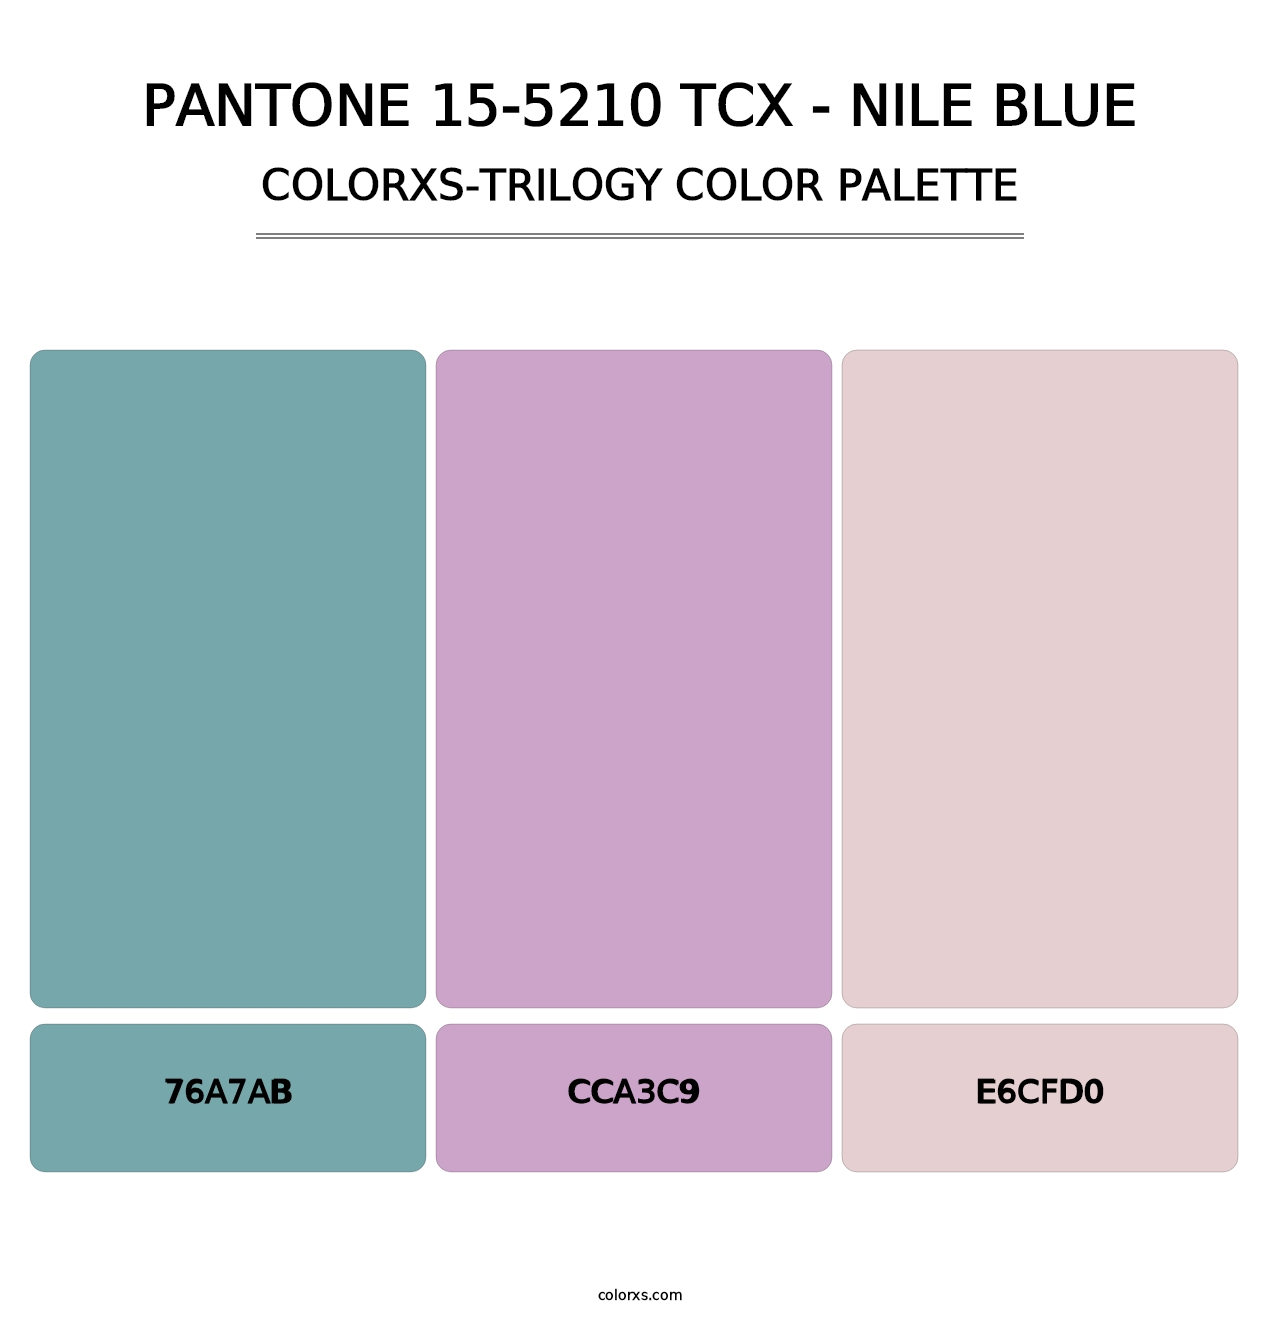 PANTONE 15-5210 TCX - Nile Blue - Colorxs Trilogy Palette